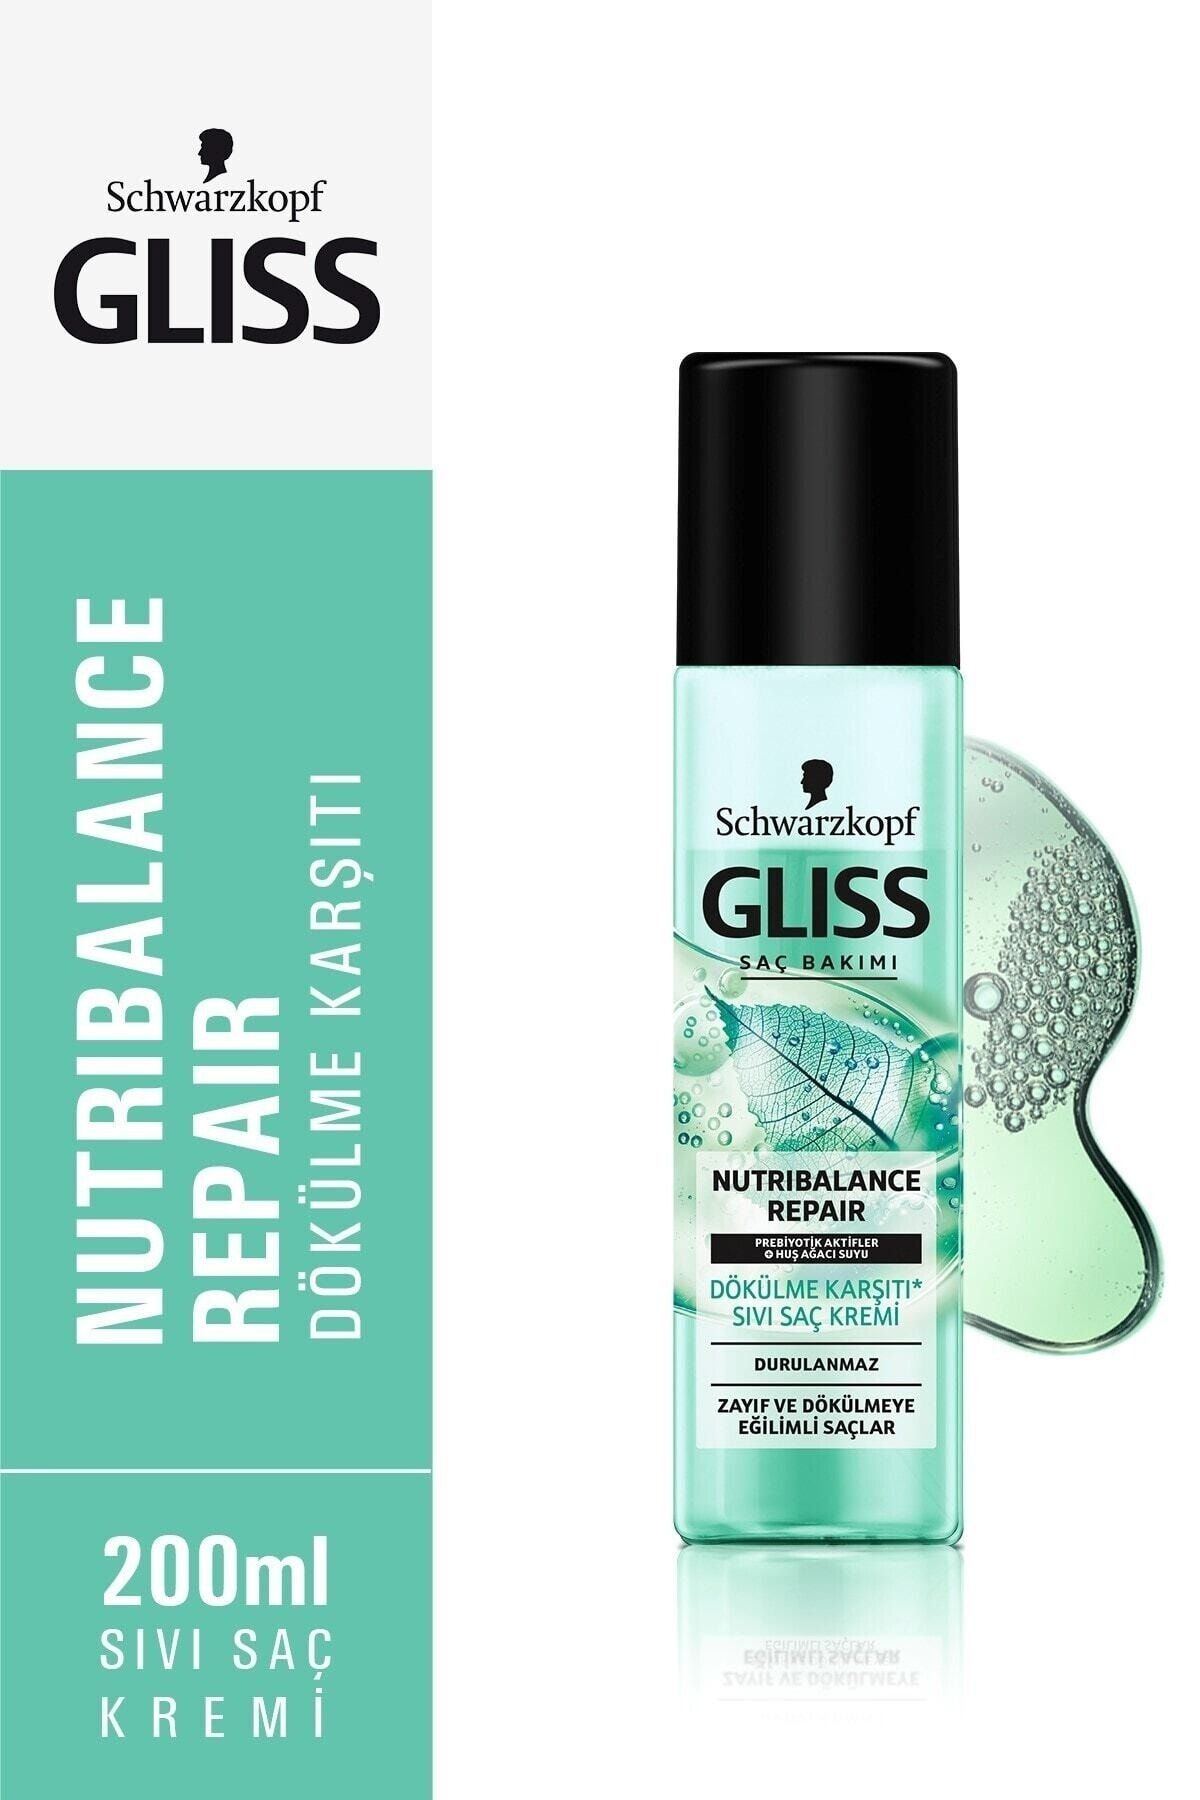 Gliss مجموعه مراقبت از مو Nutribalance ضدشامپو 360 میلی لیتر + نرم کننده مایع مو 200 میلی لیتر + روغن الیکسیر اصلی